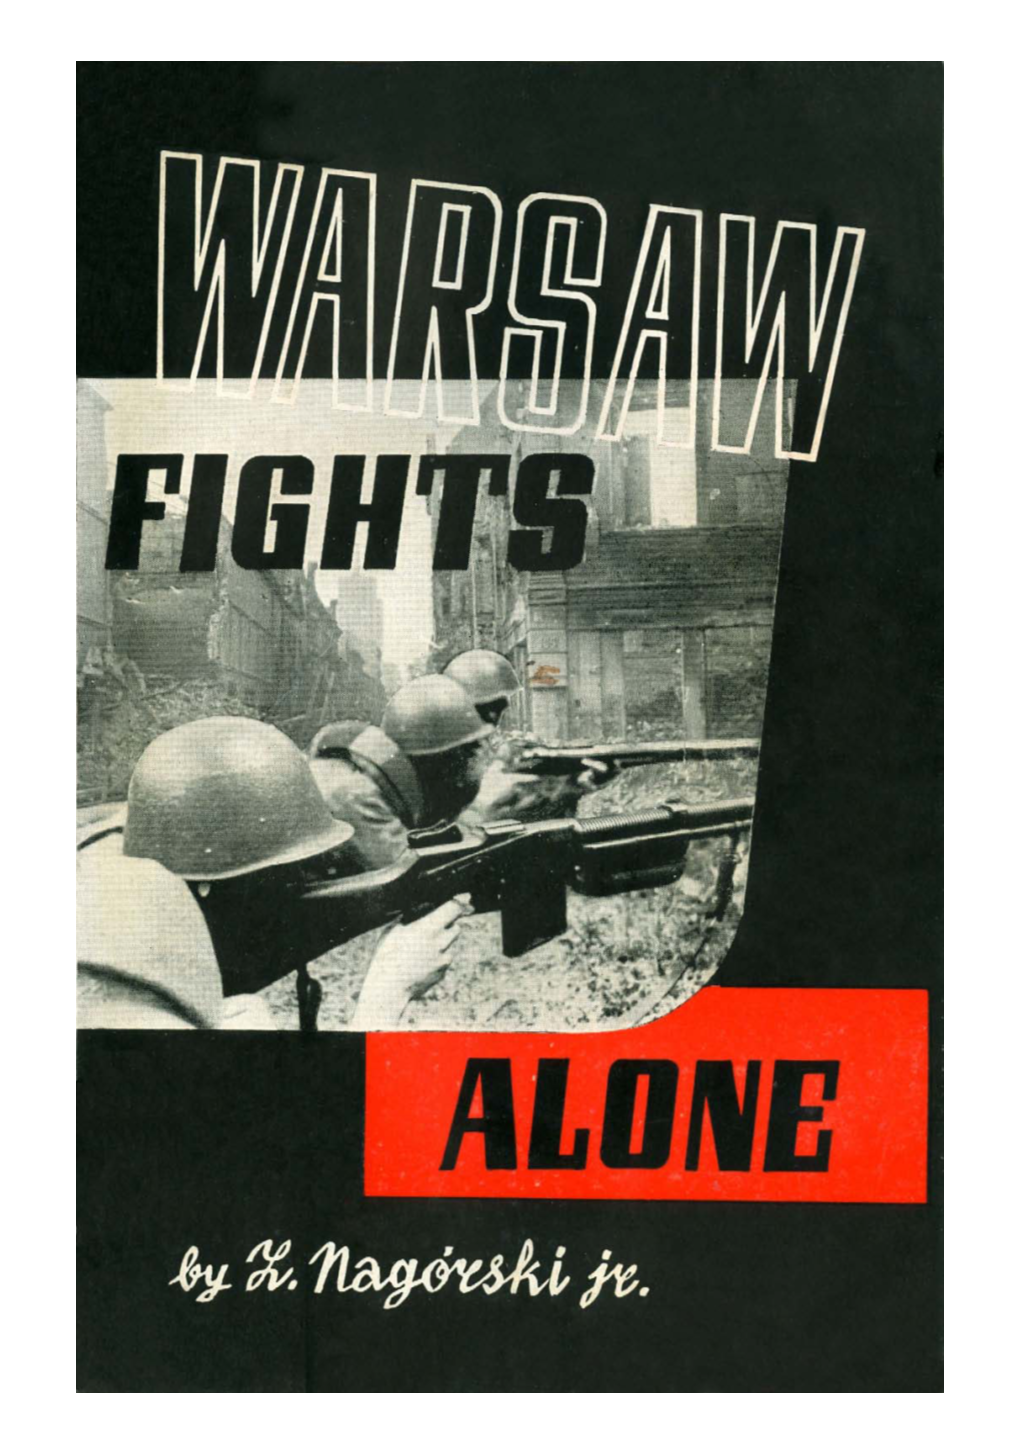 Warsaw Fights Alone